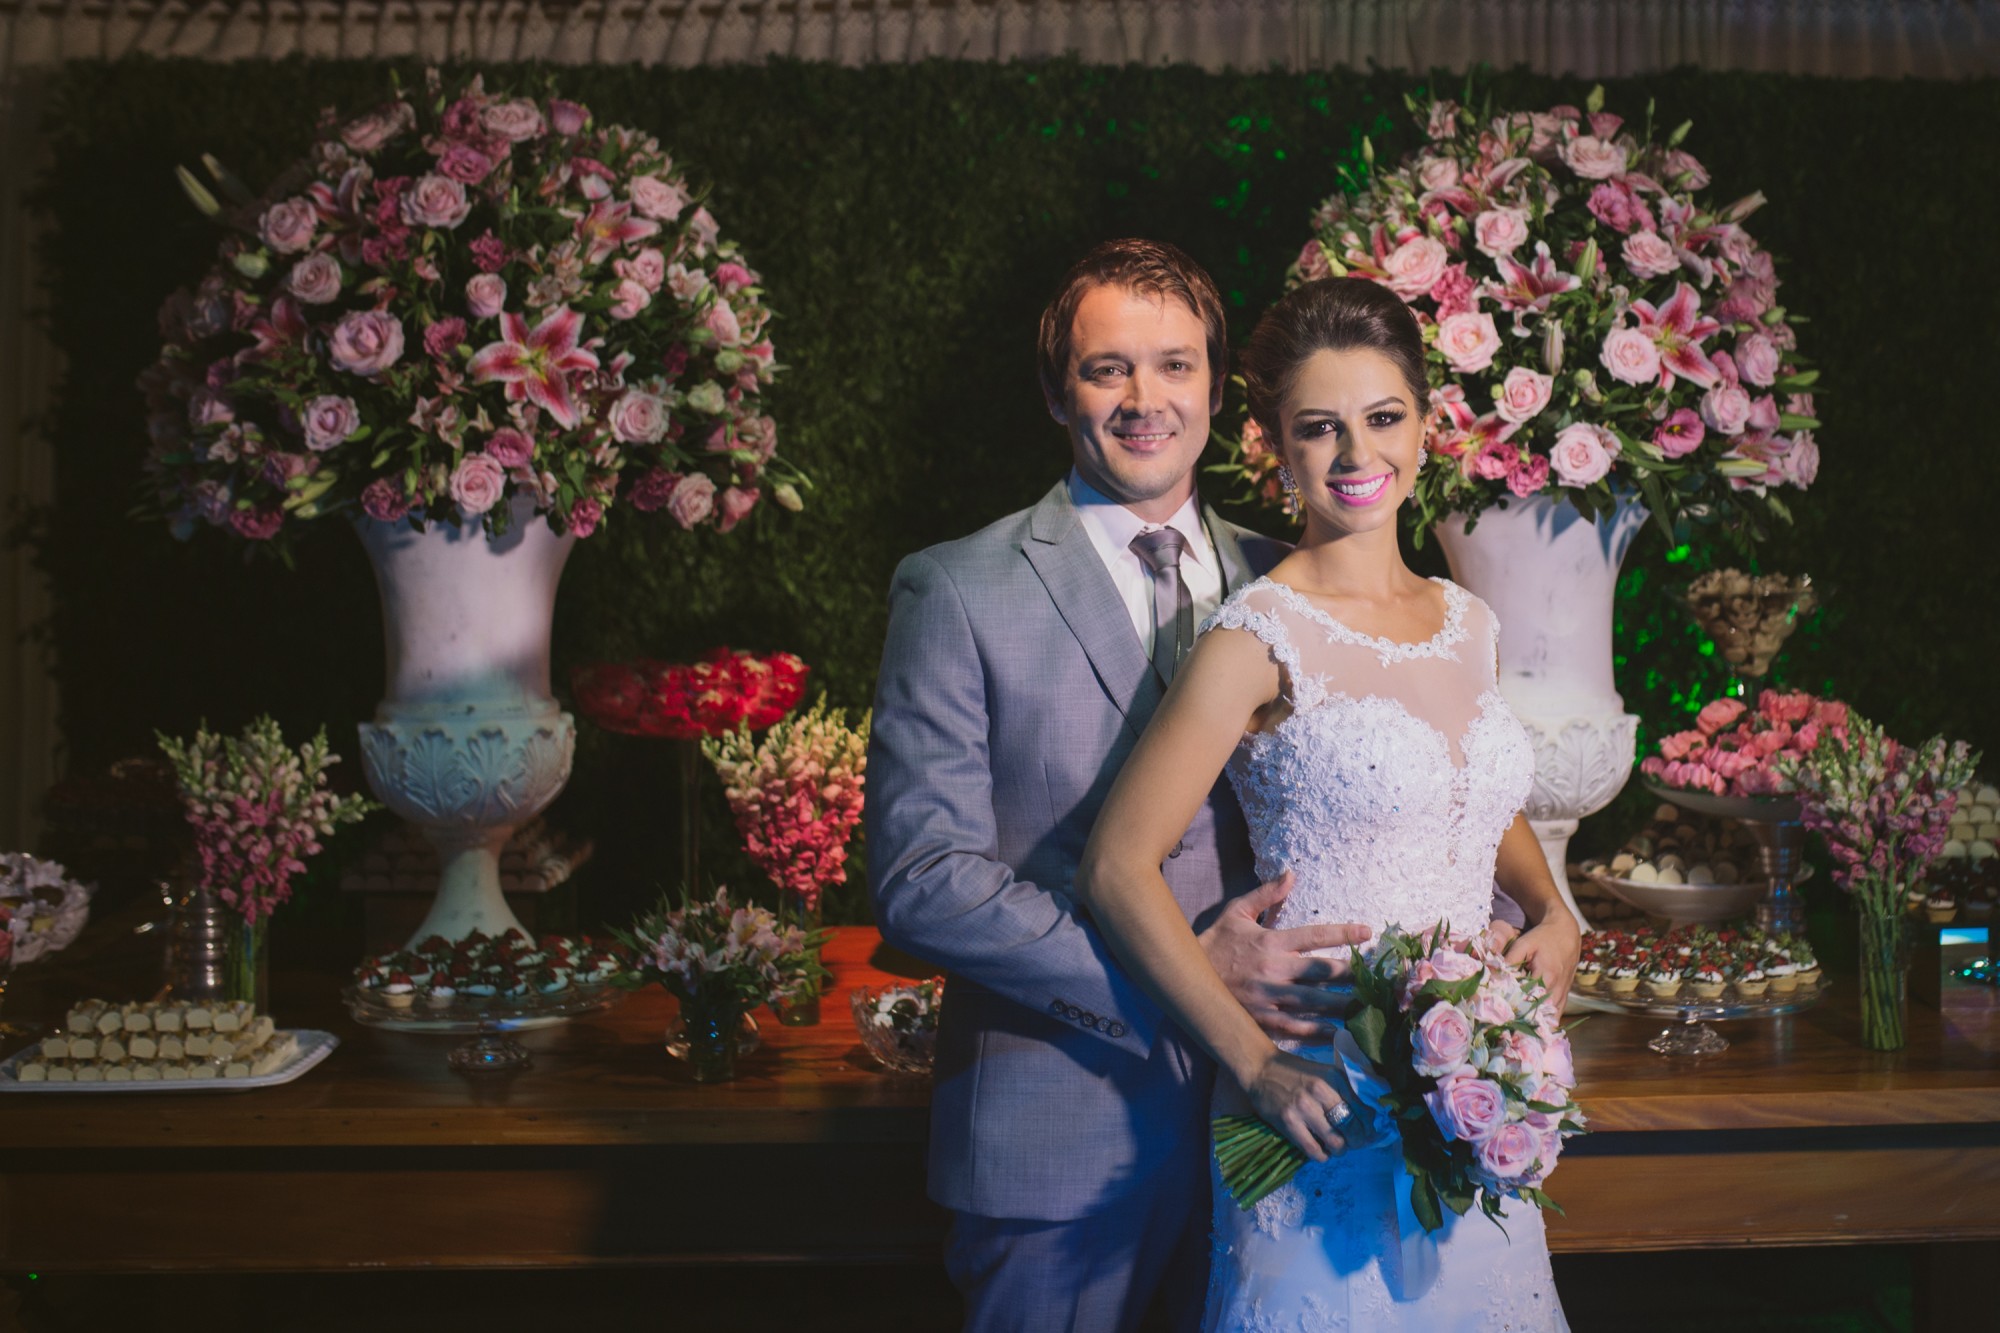 Maiara Kuki e Ricardo - Casamento em Palotina - PR por Lorran Souza e Léia Sotile - fotografo de casamentos00022